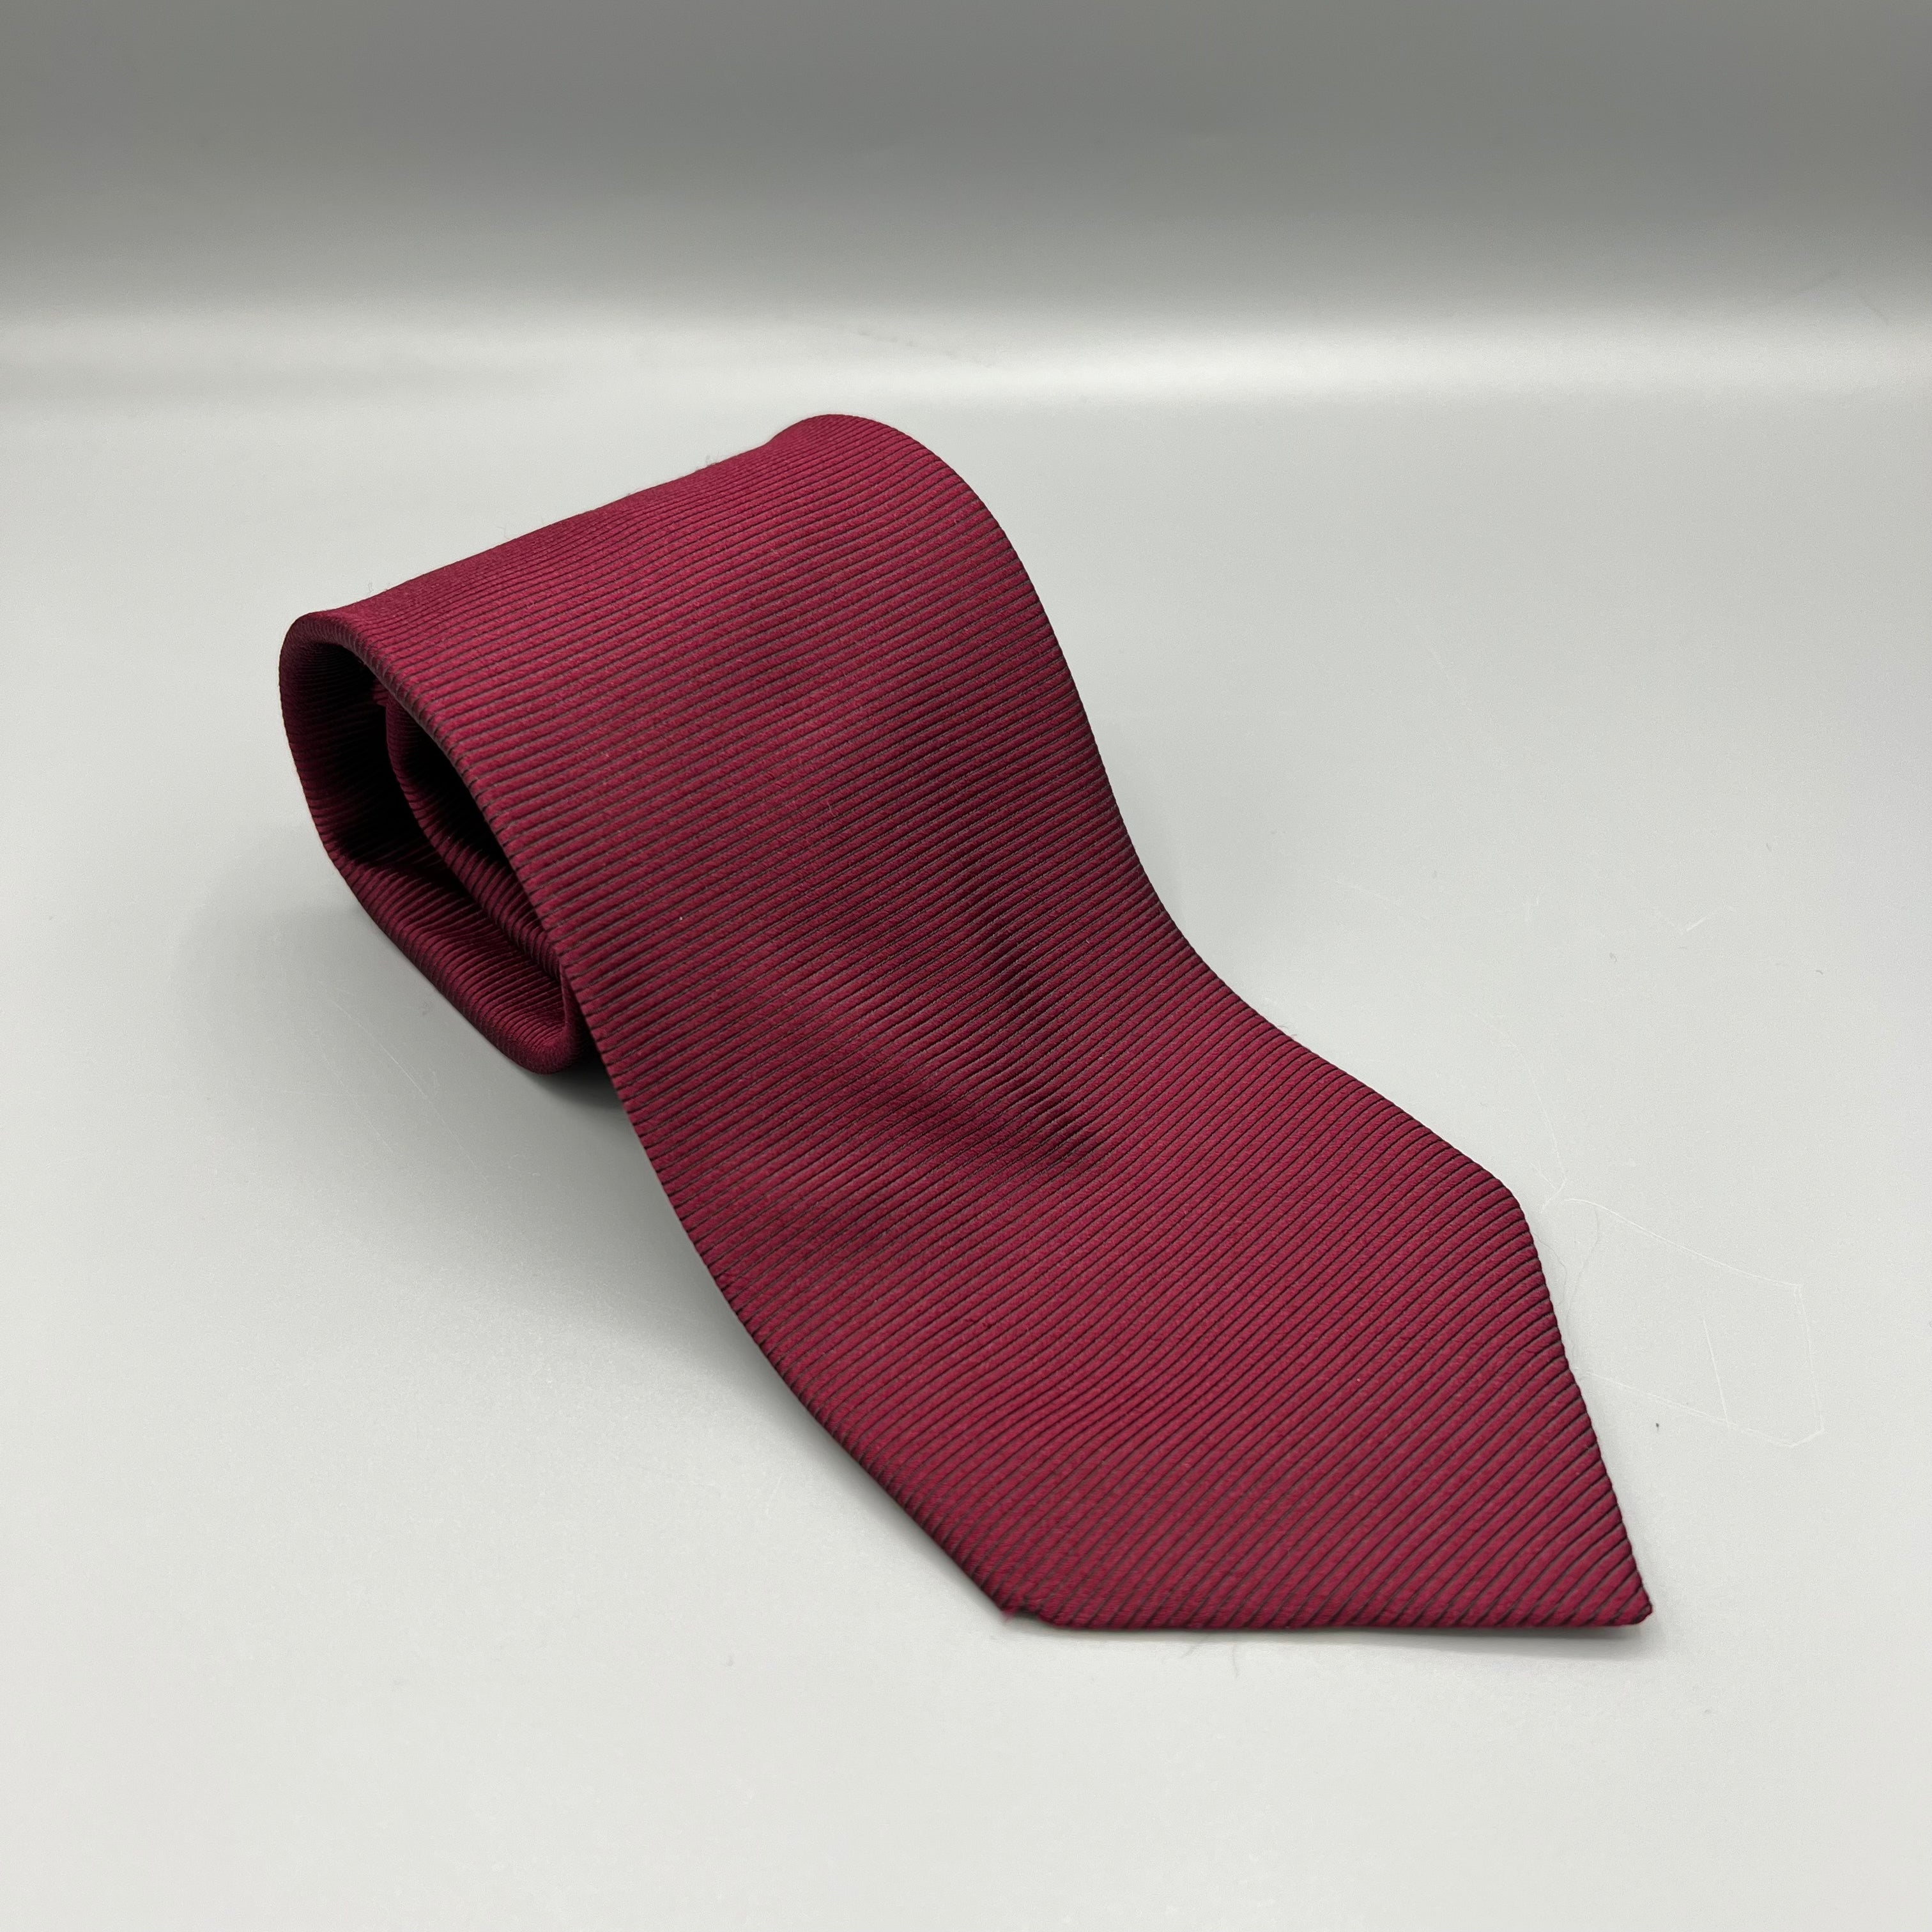 Cravate bordeaux texture Atelier della cravatta